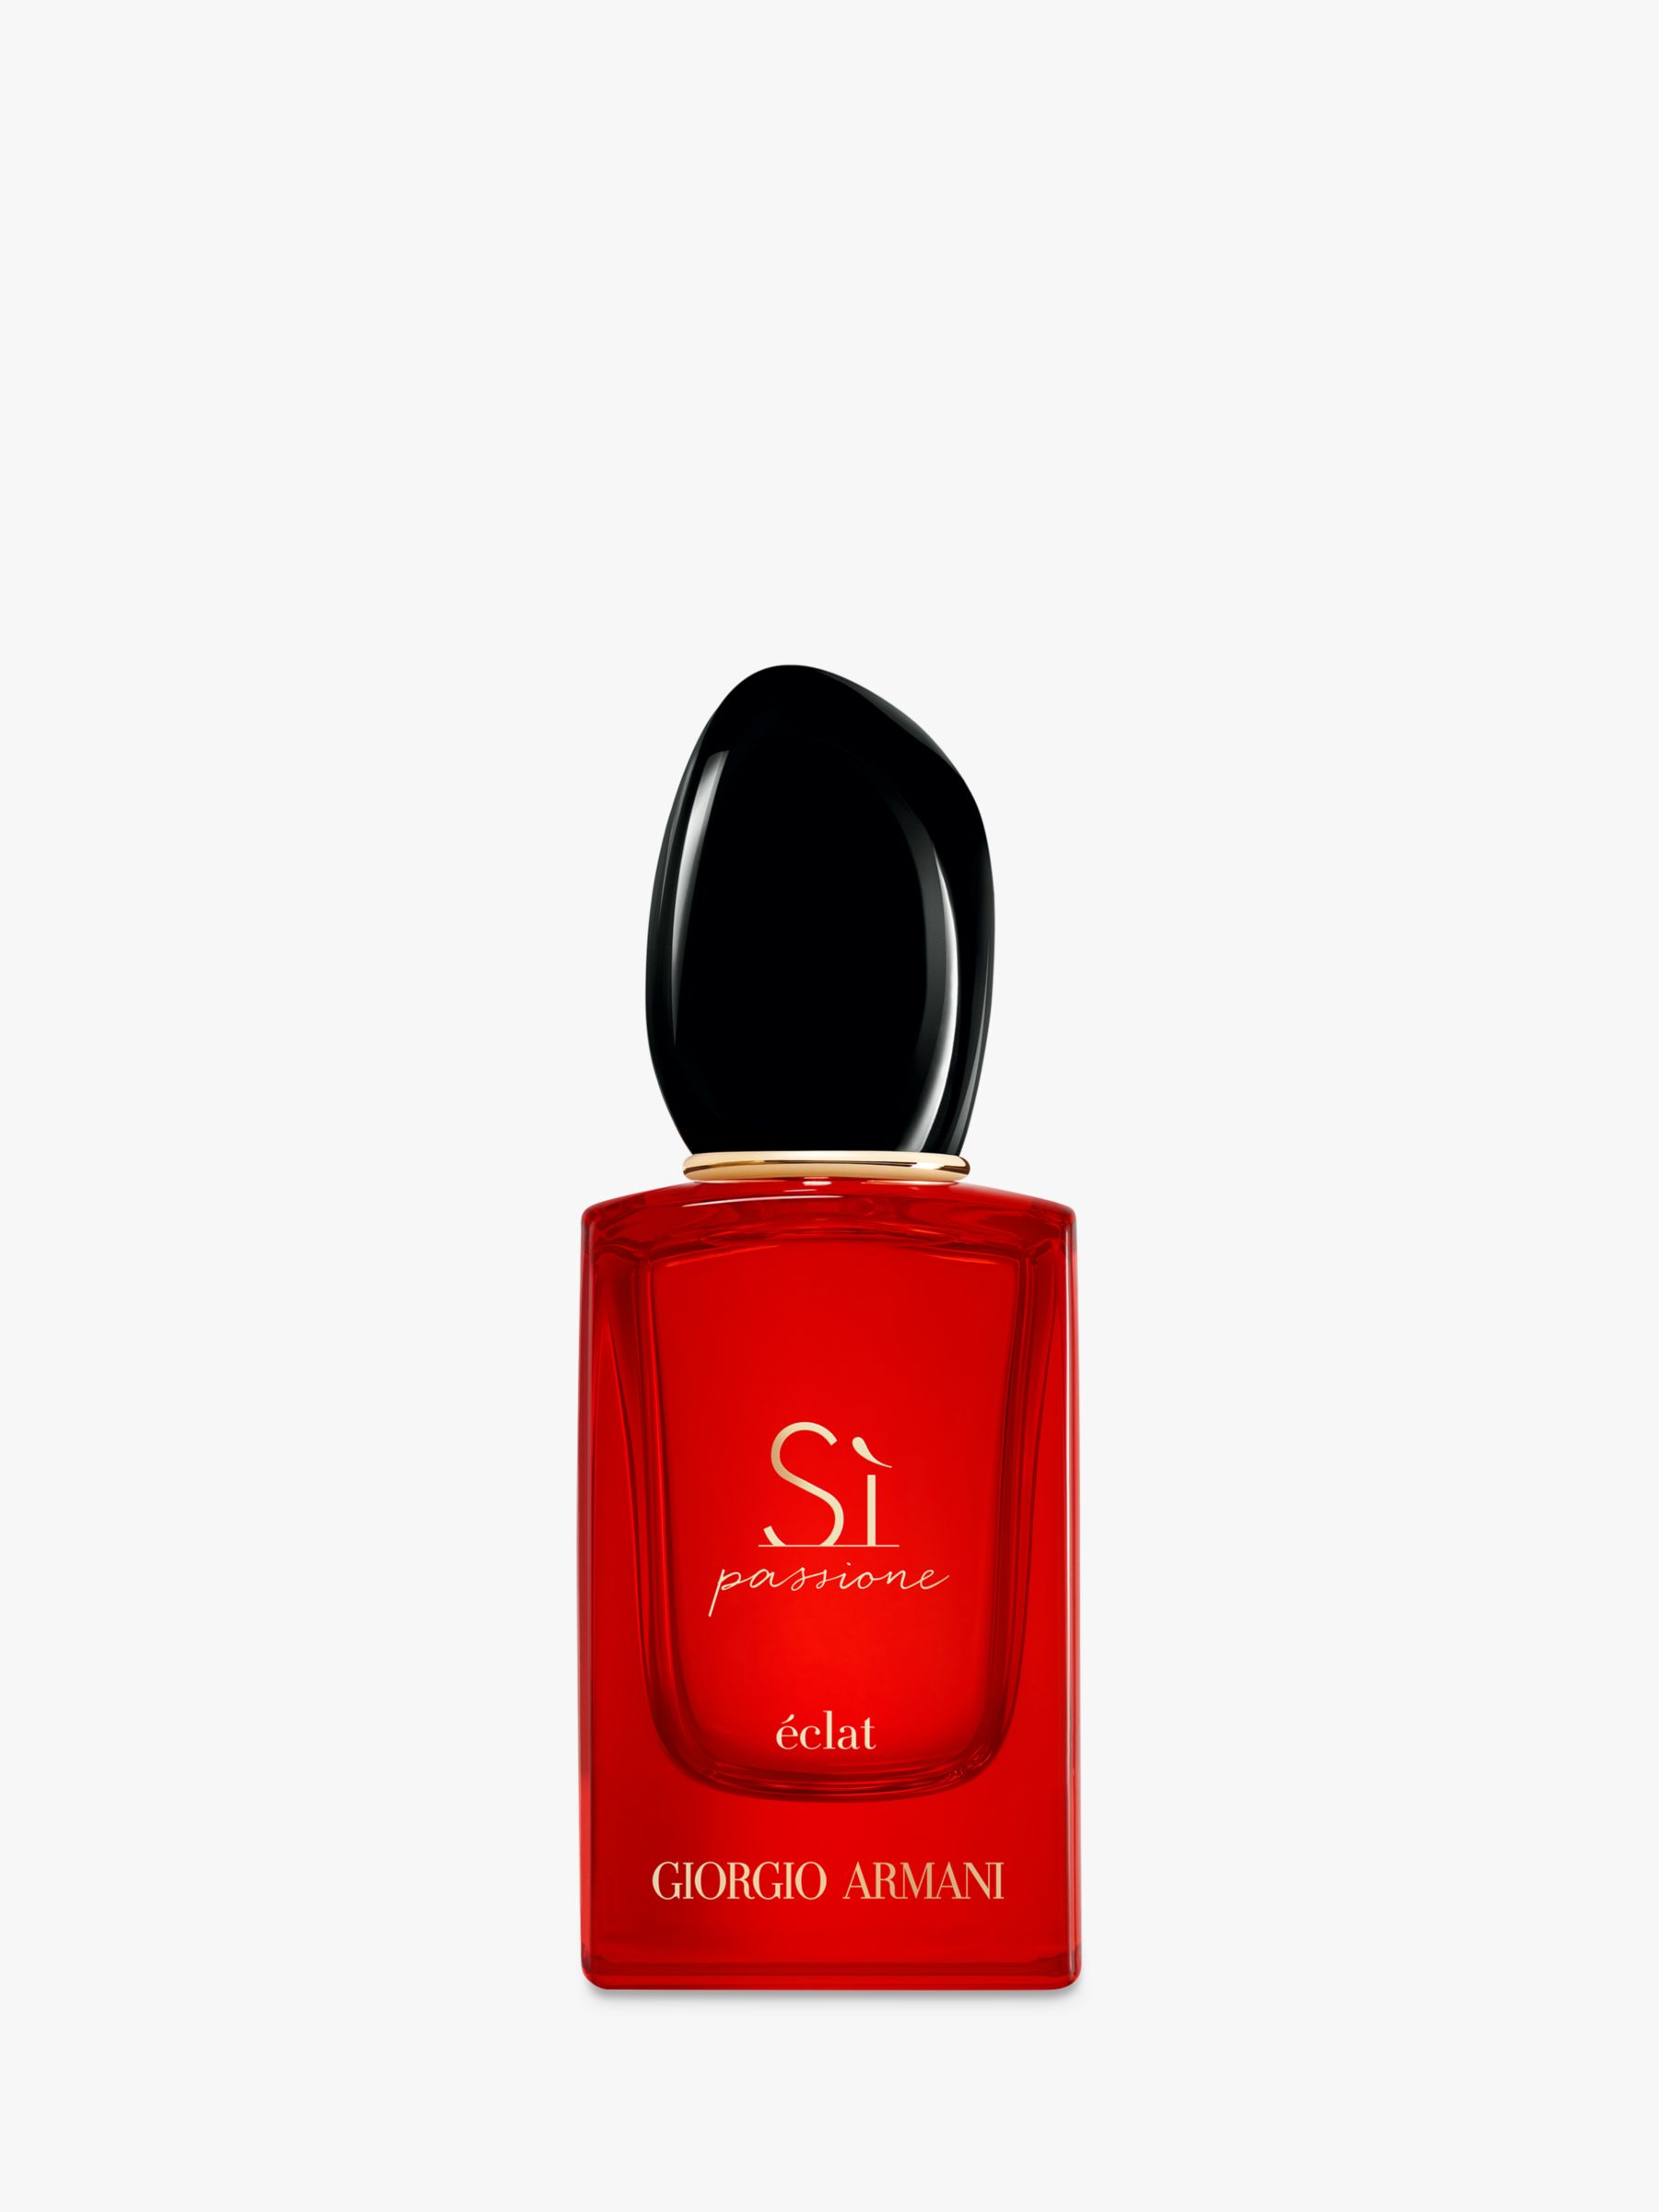 Giorgio Armani Si Passione Eclat Eau de Parfum, 30ml at John Lewis &  Partners